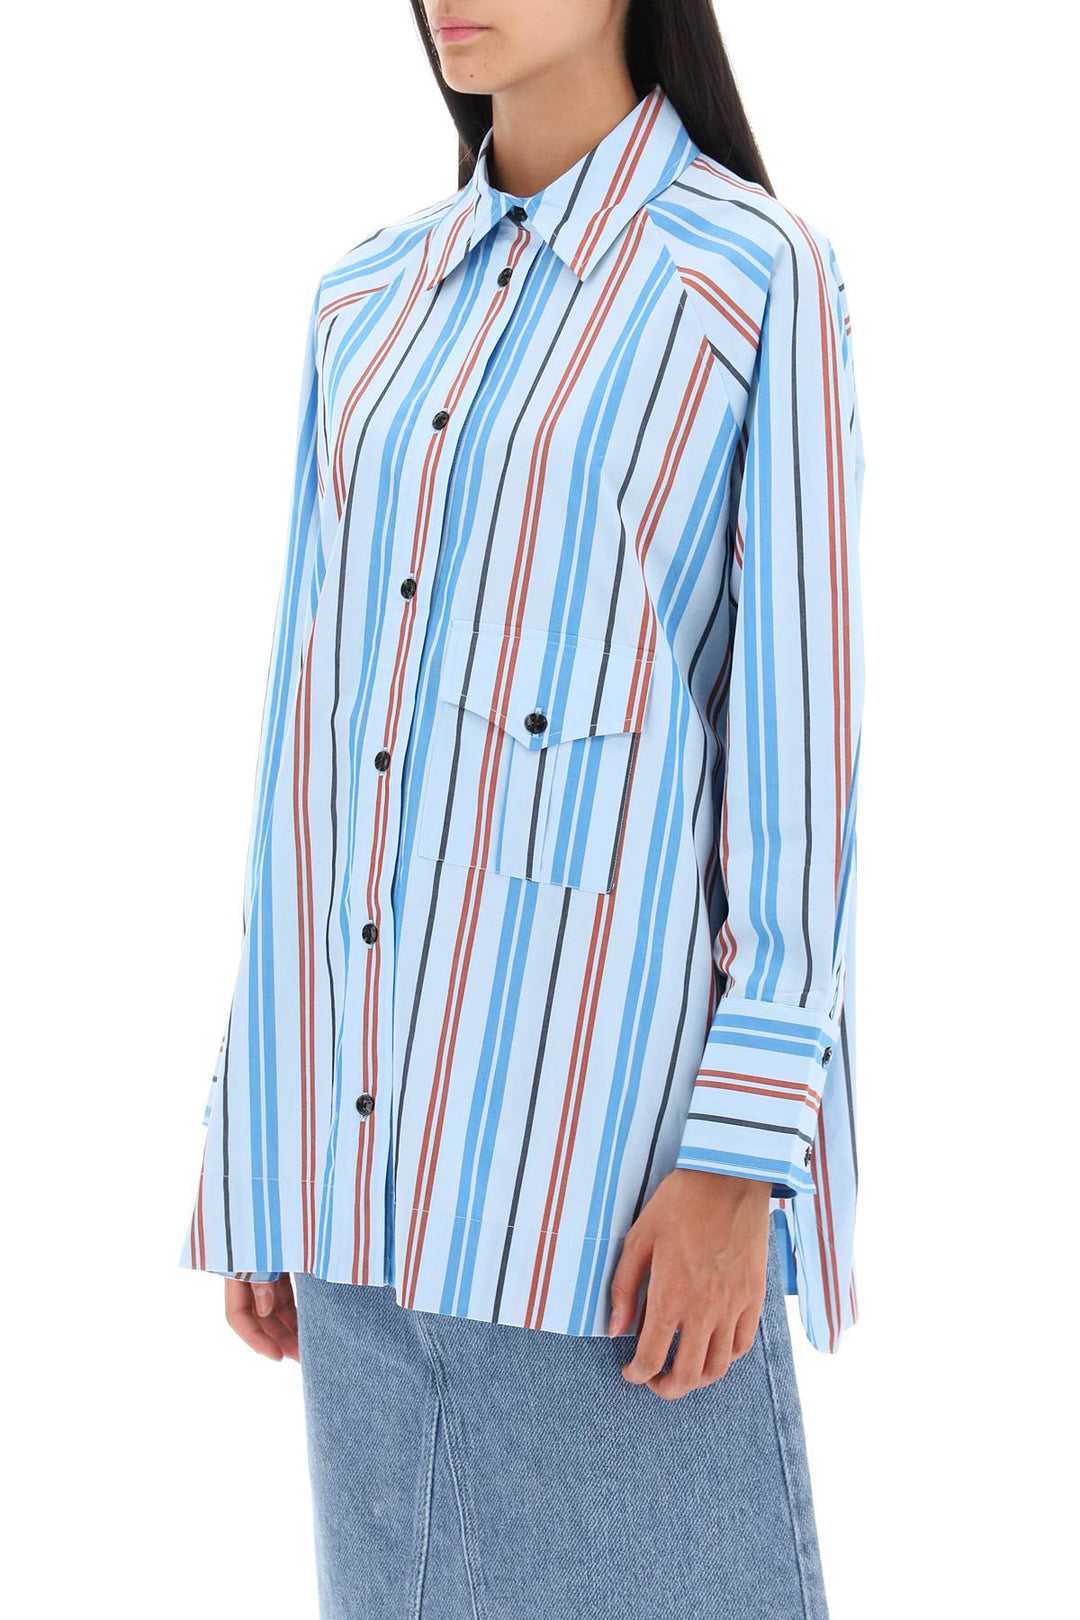 Ganni Oversized Striped Shirt   Celeste